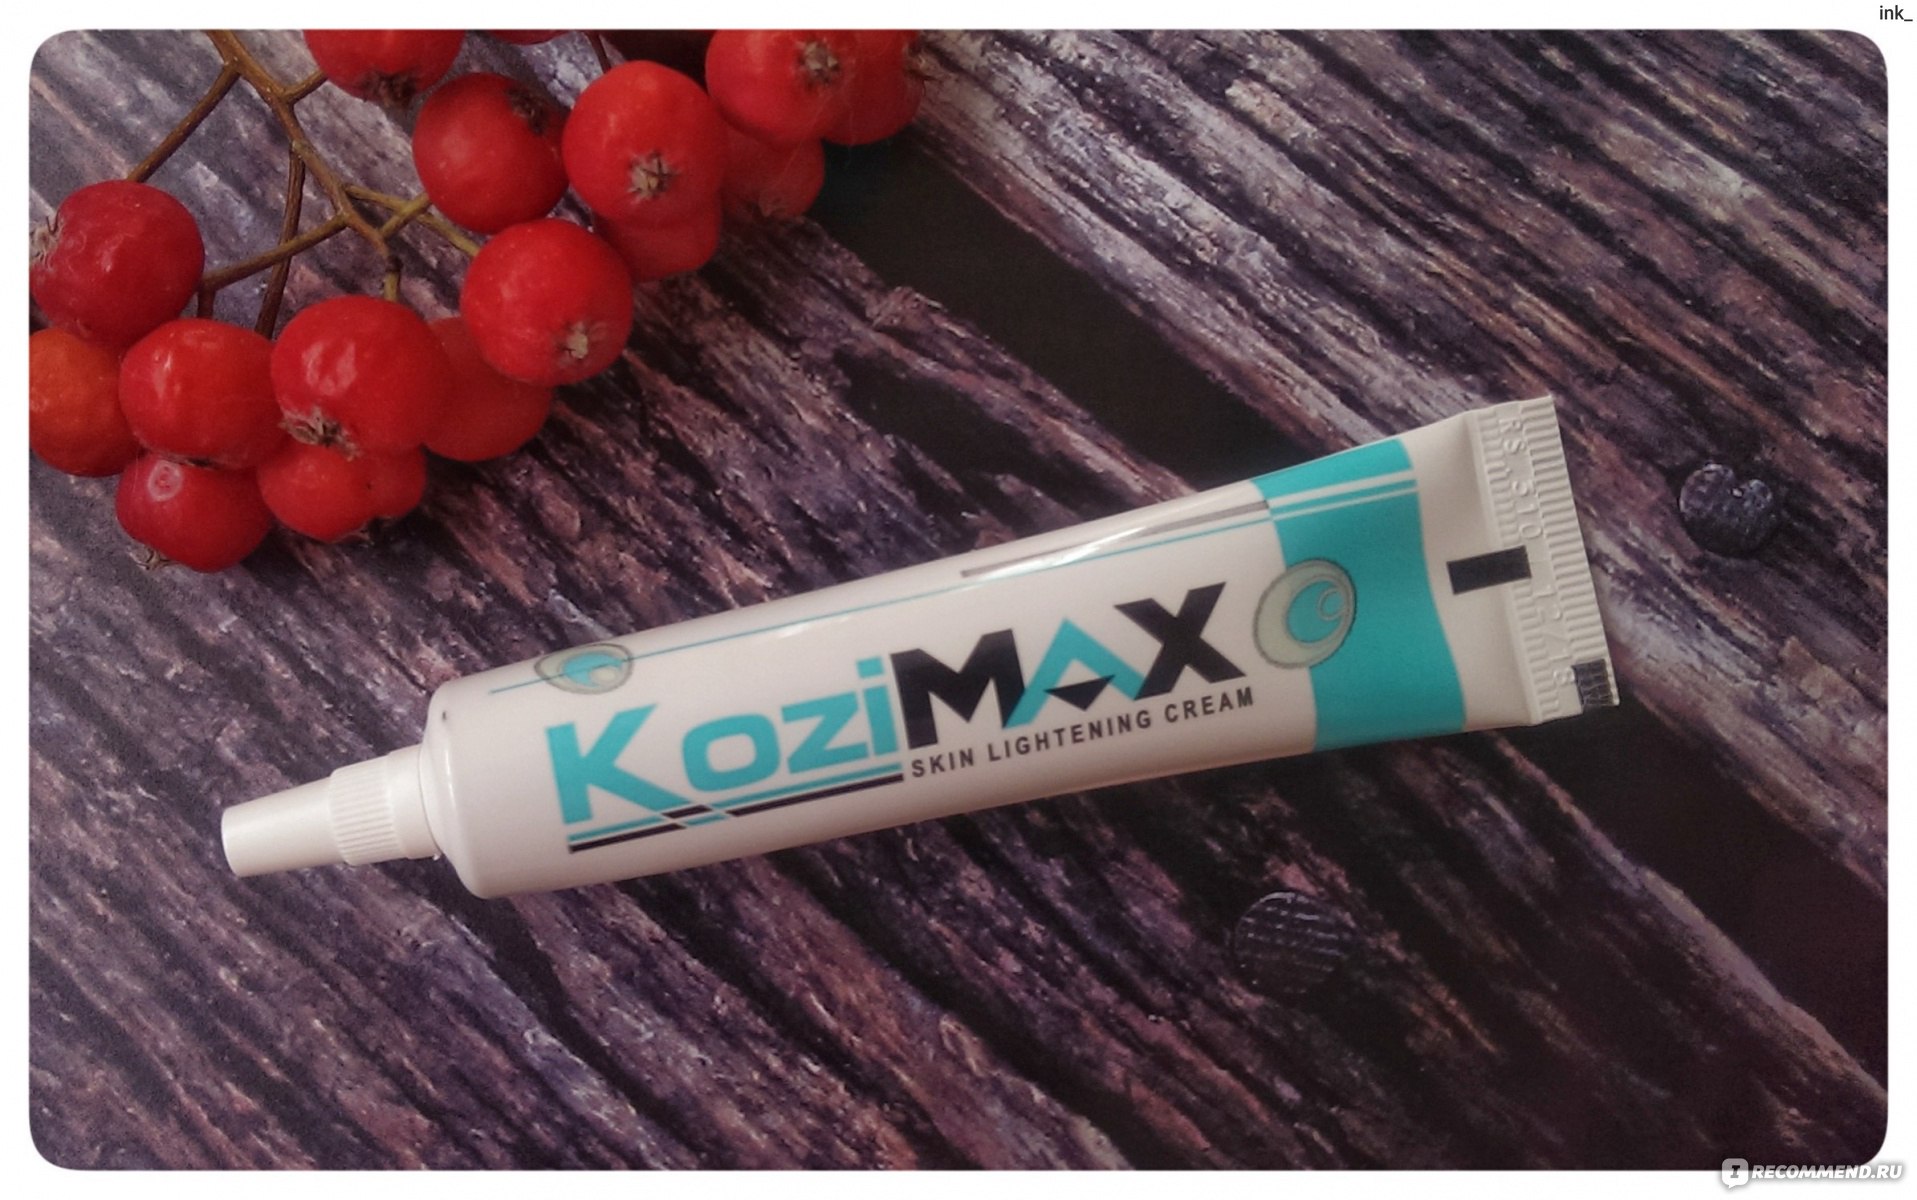 Крем для отбеливания кожи Ethicare Remedies KoziMAX Skin Lightening Cream фото